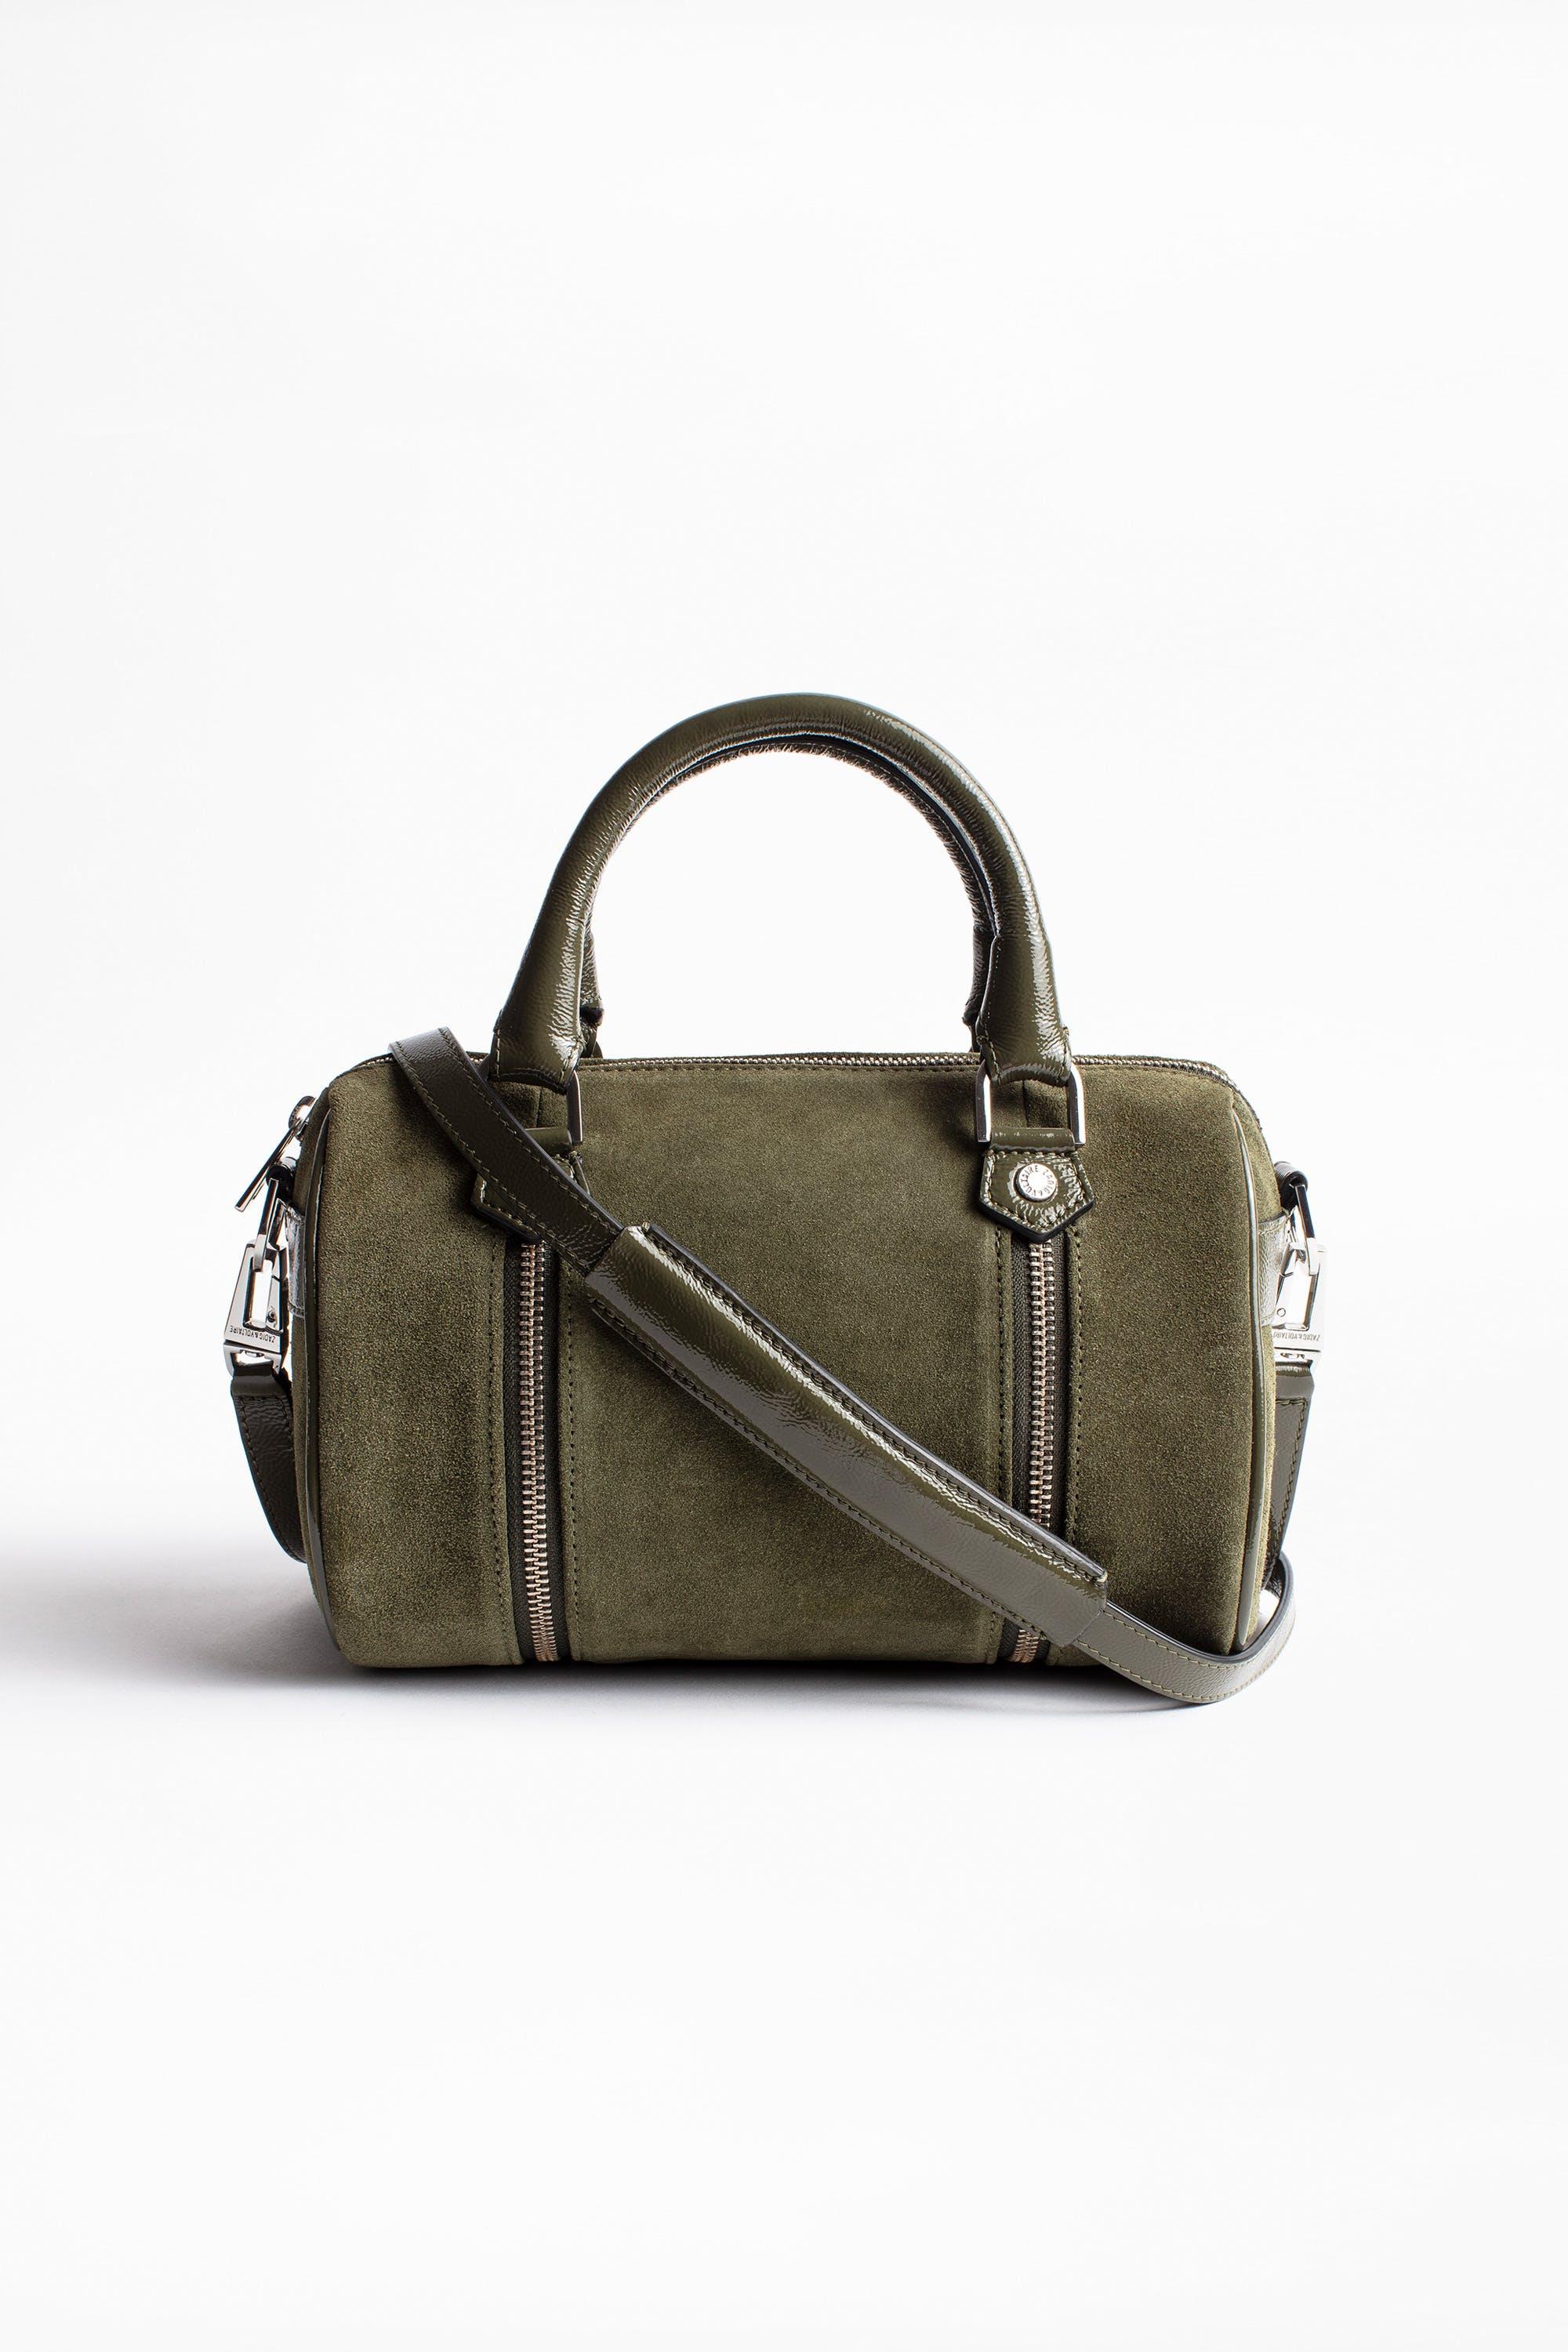 Zadig & Voltaire Xs Sunny Suede Shoulder Bag in Green | Lyst